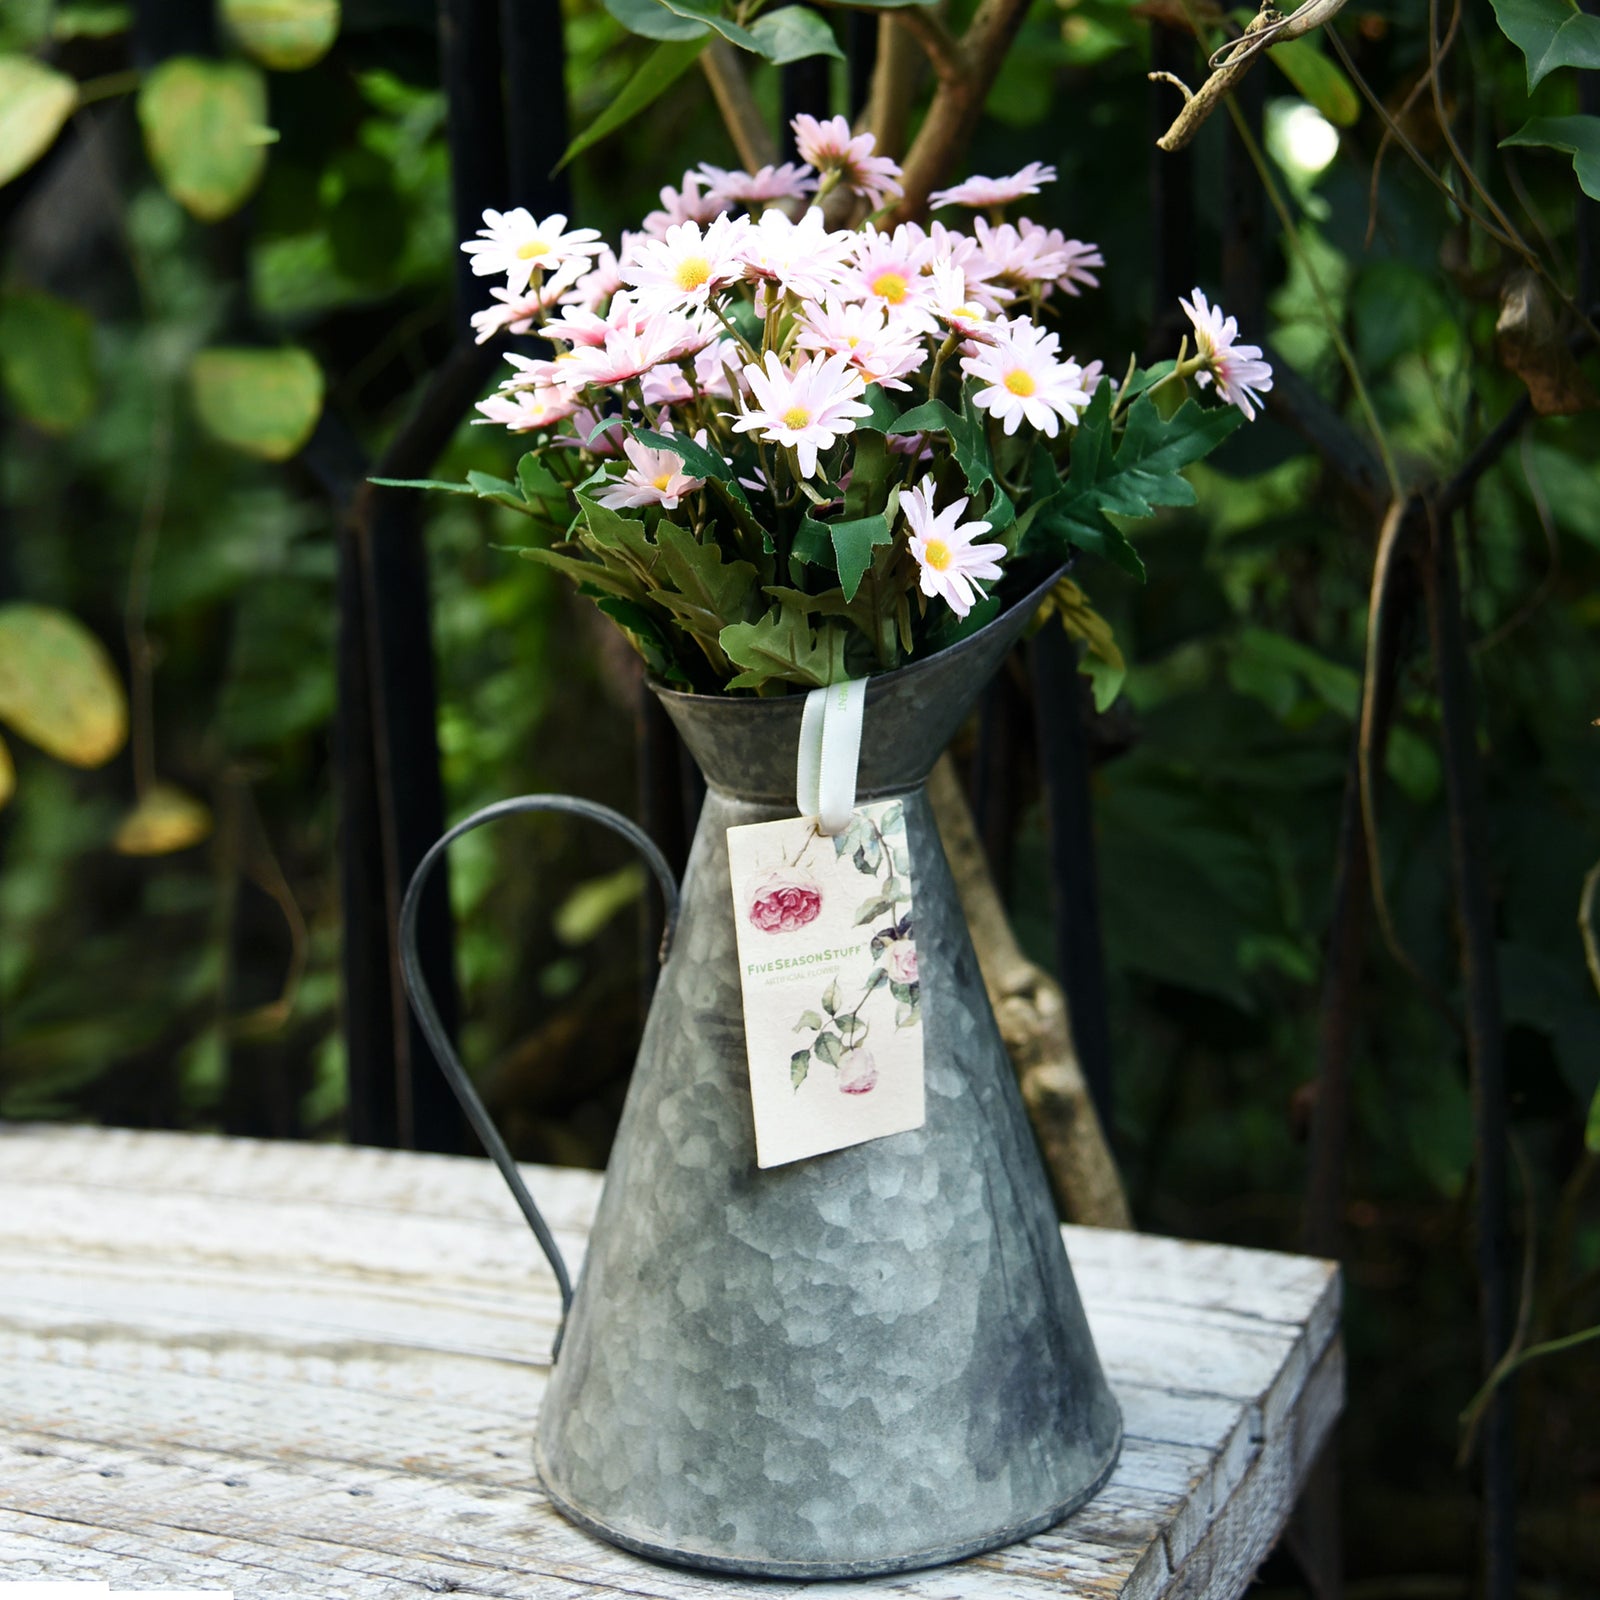 Daisy Silk Flowers Outdoor Artificial Flowers Arrangements (Lemonade Pink) 2 Bunches